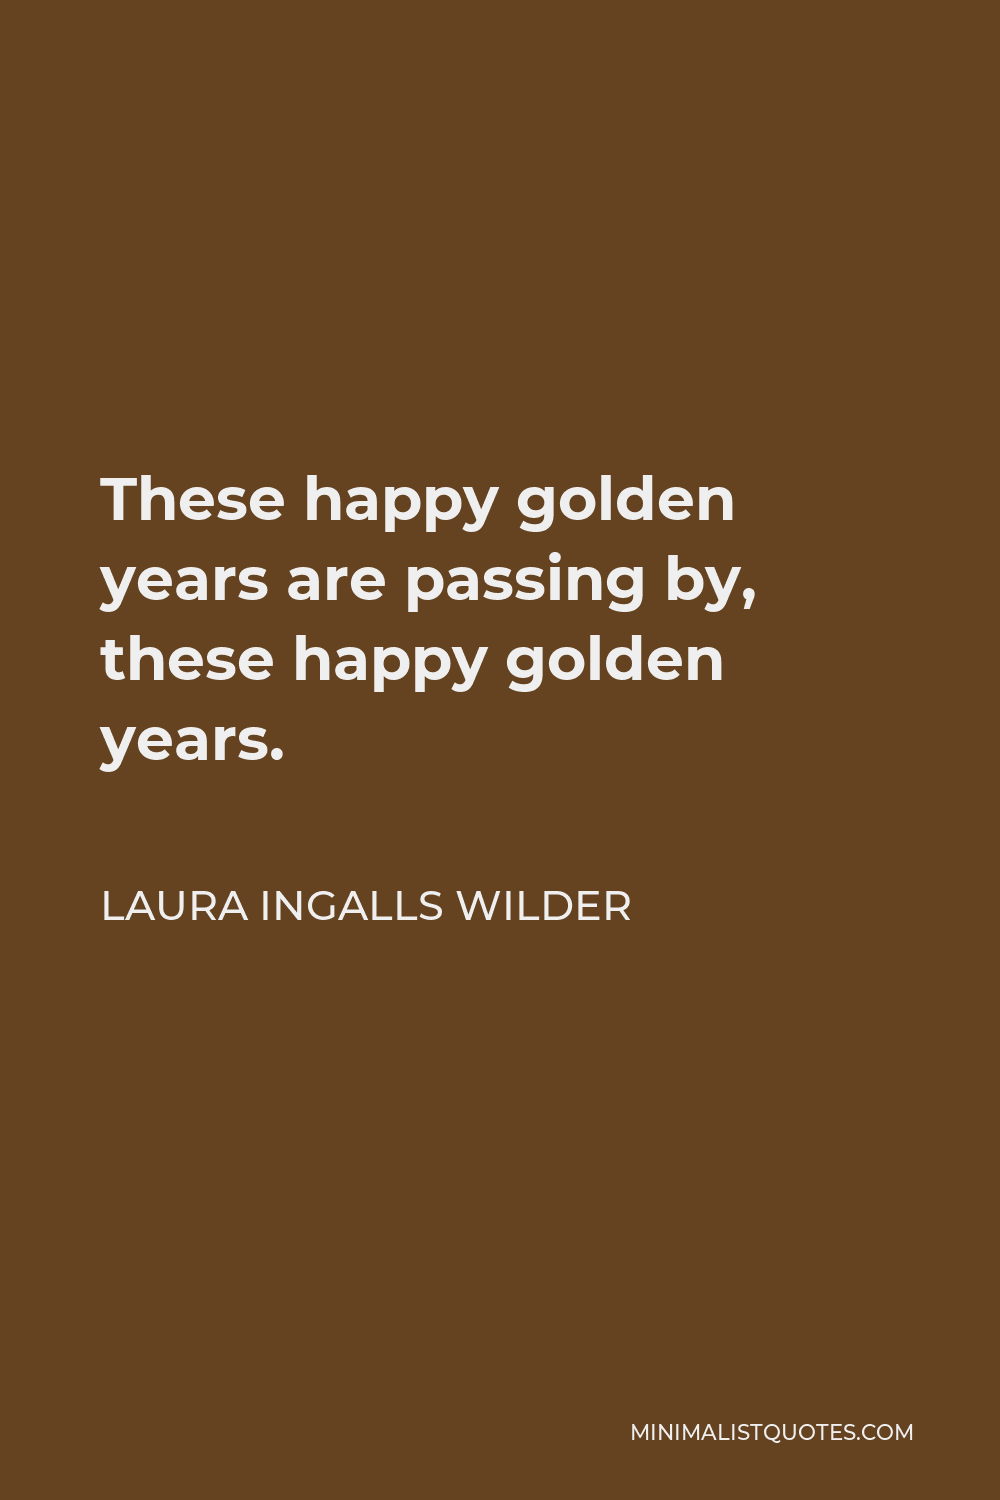 Laura Ingalls Wilder Quote - These happy golden years are passing by, these happy golden years.